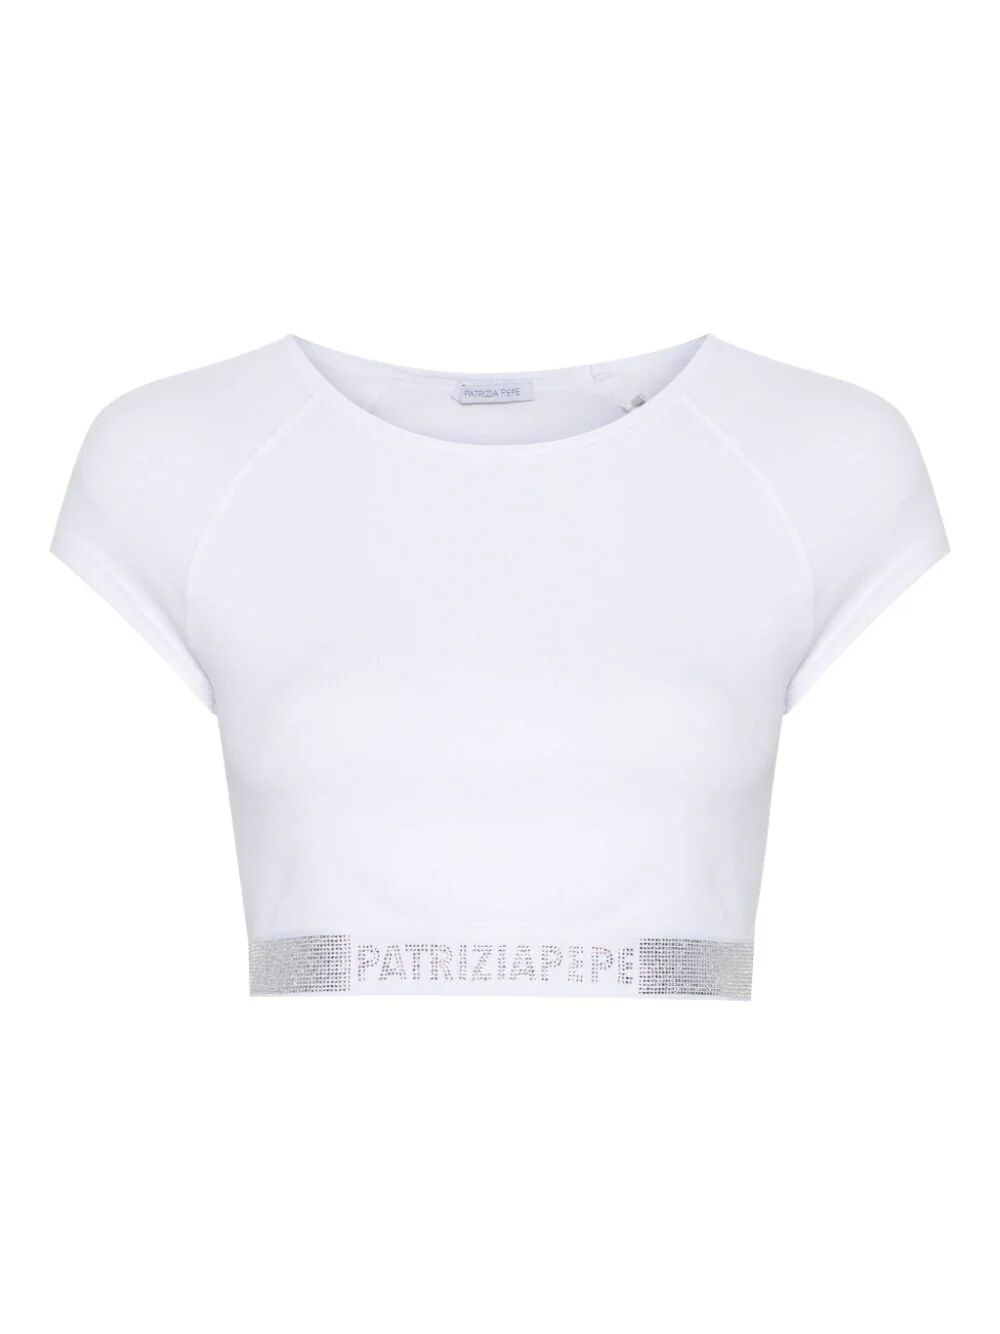 Patrizia Pepe Strass Top In White